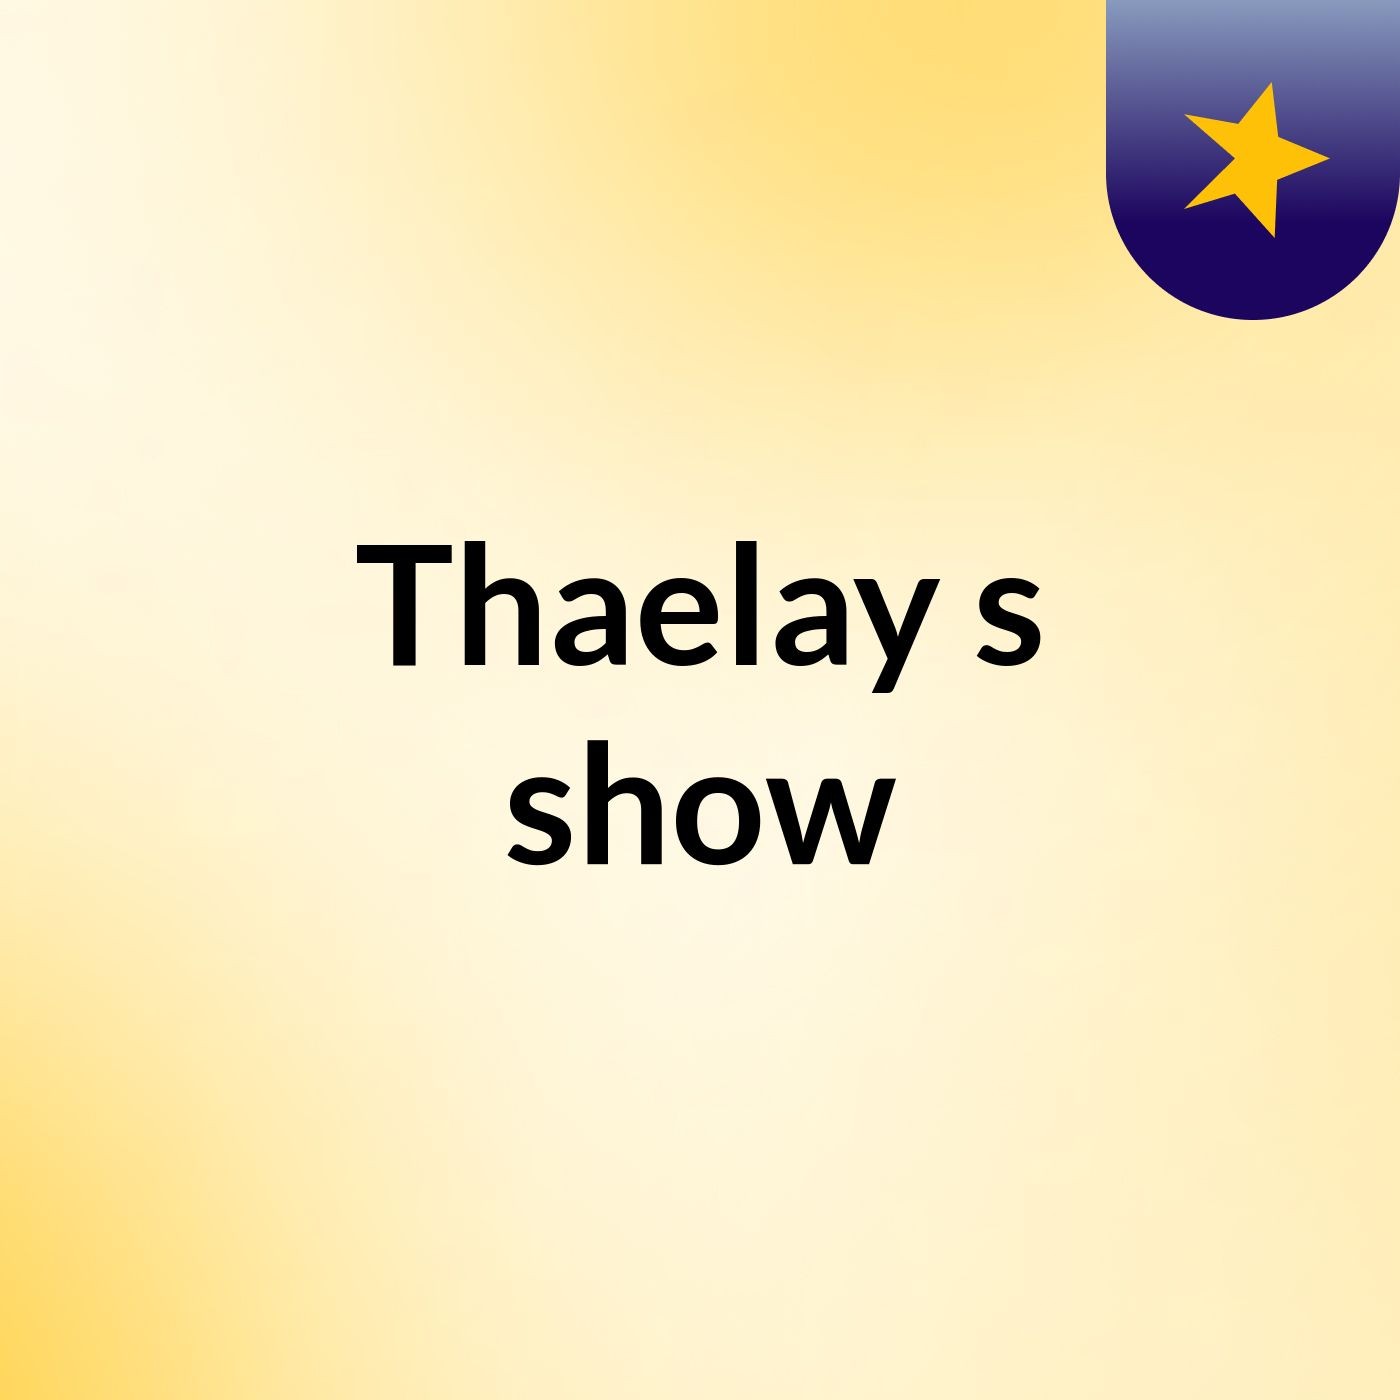 Thaelay's show